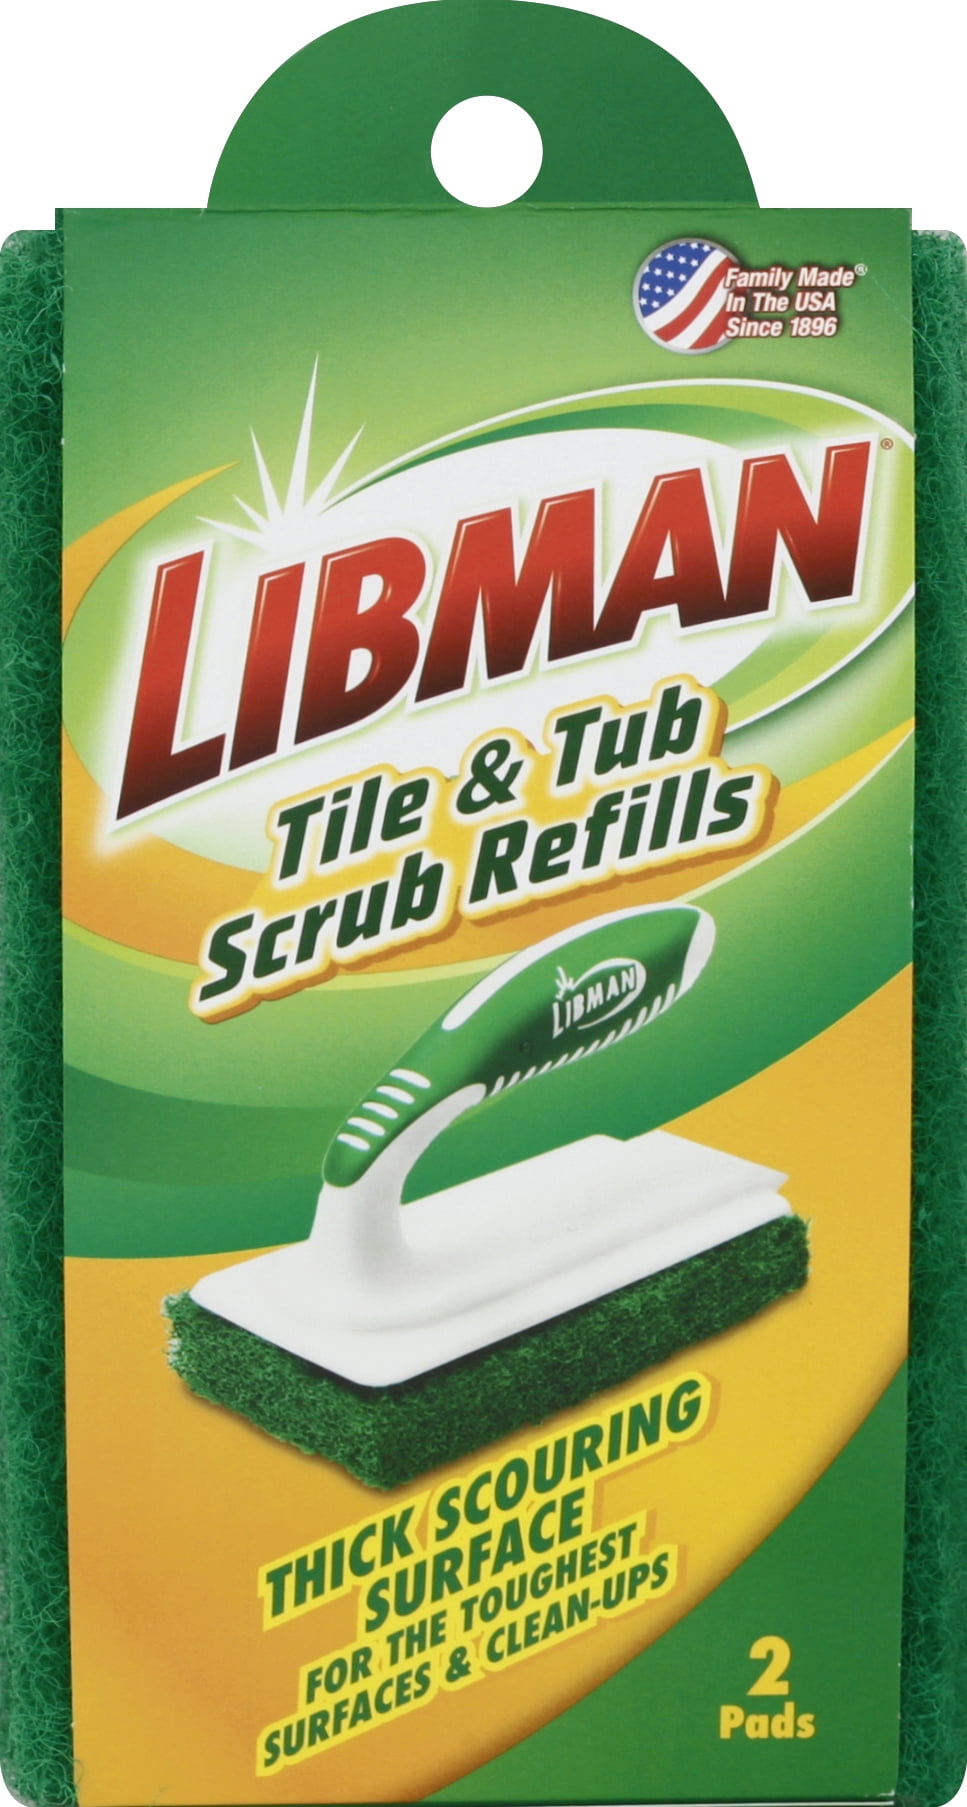 Libman Tile & Tub Scrub Brush, 6X3, Green, 6 Scrubs (Libman 1161)